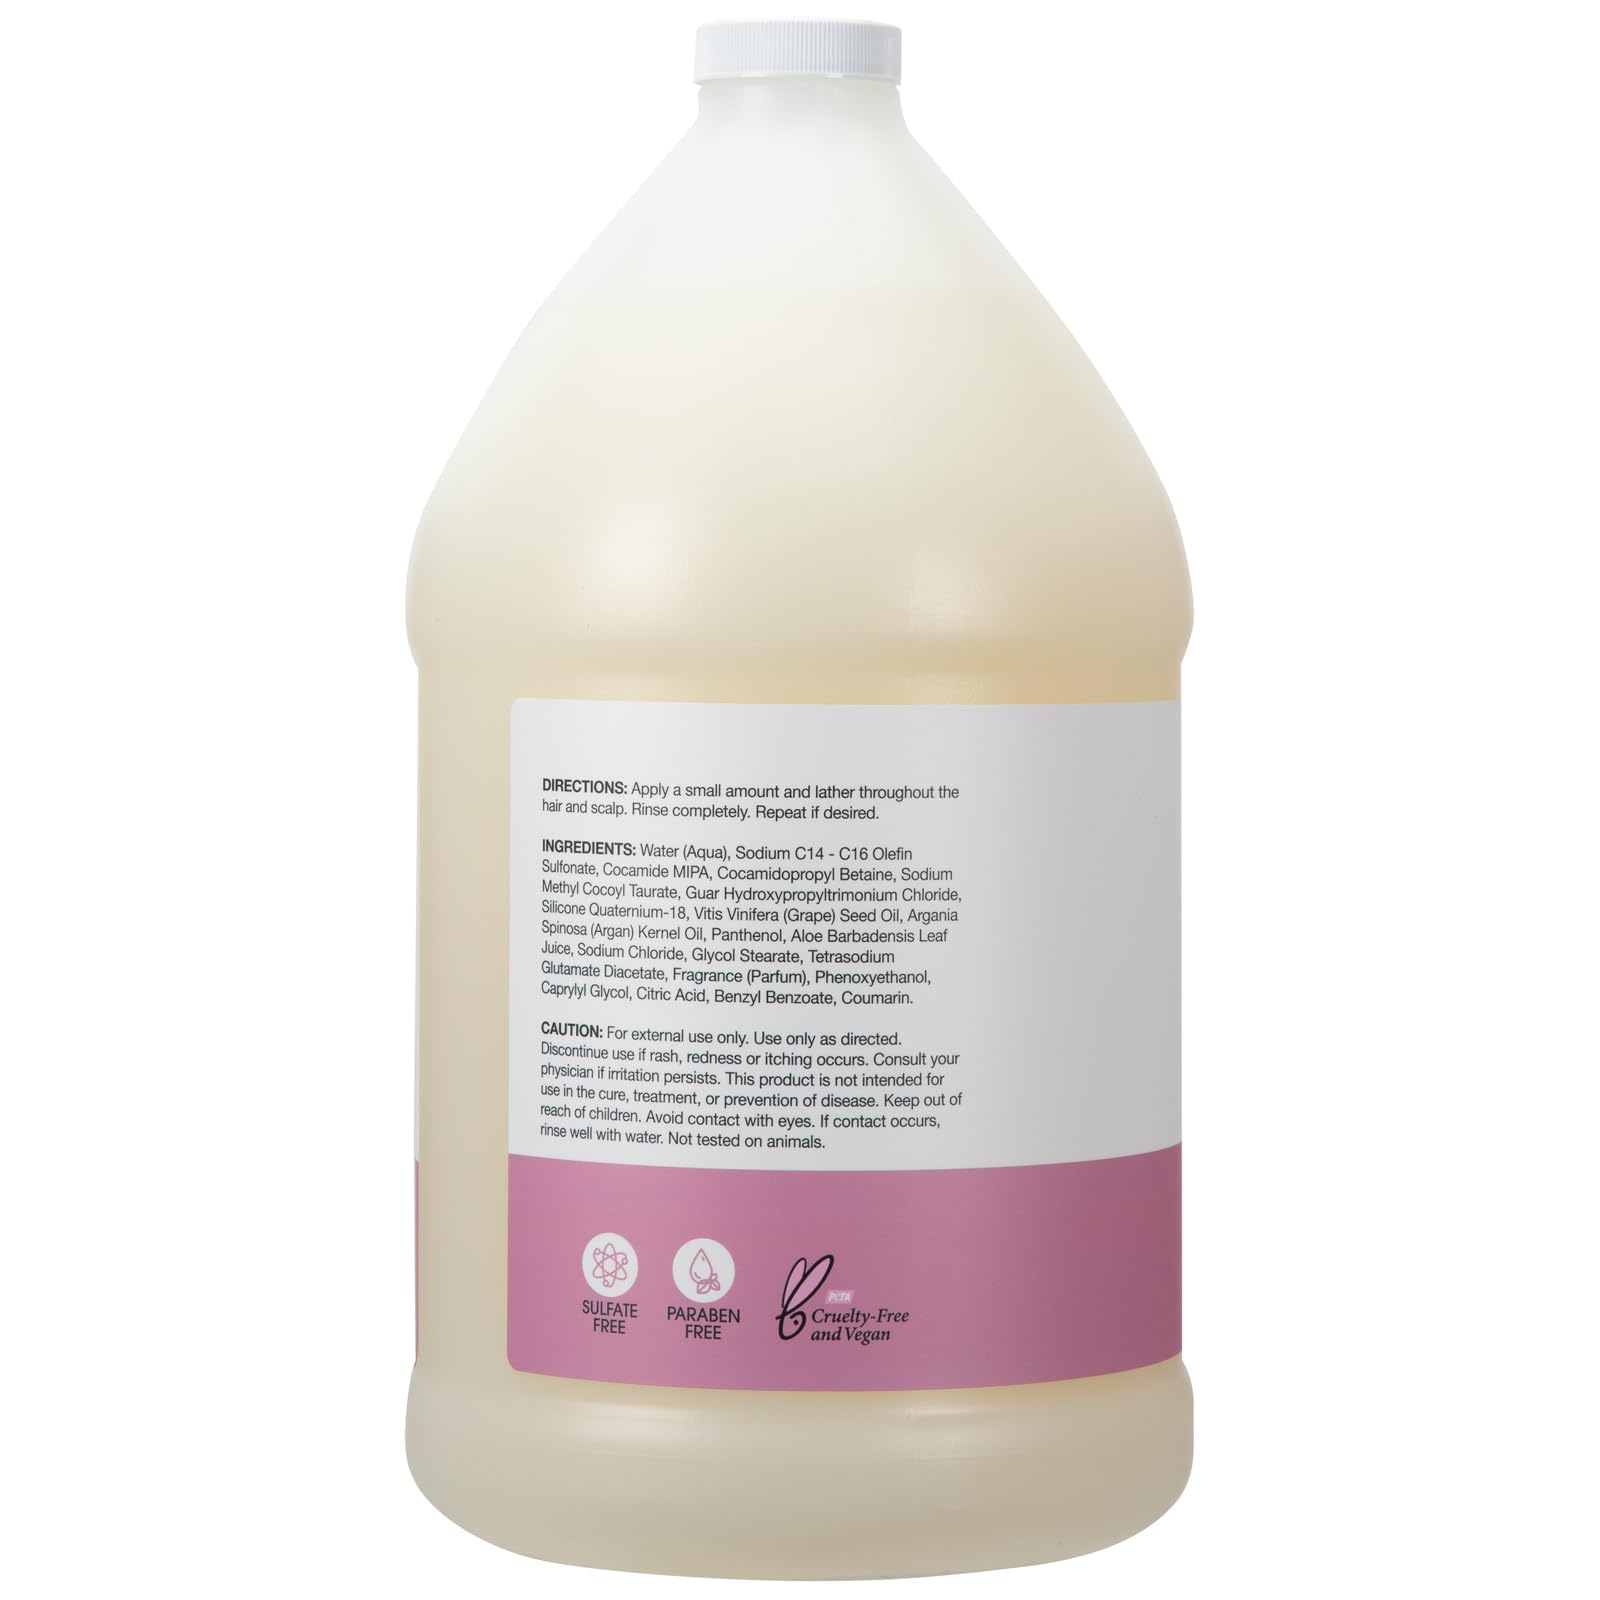 Ginger Lily Farms Salon Formula ChromaSafe Pro Color-Safe Shampoo for Color-Treated Hair, 100% Vegan & Cruelty-Free, 1 Gallon (128 fl oz) Refill